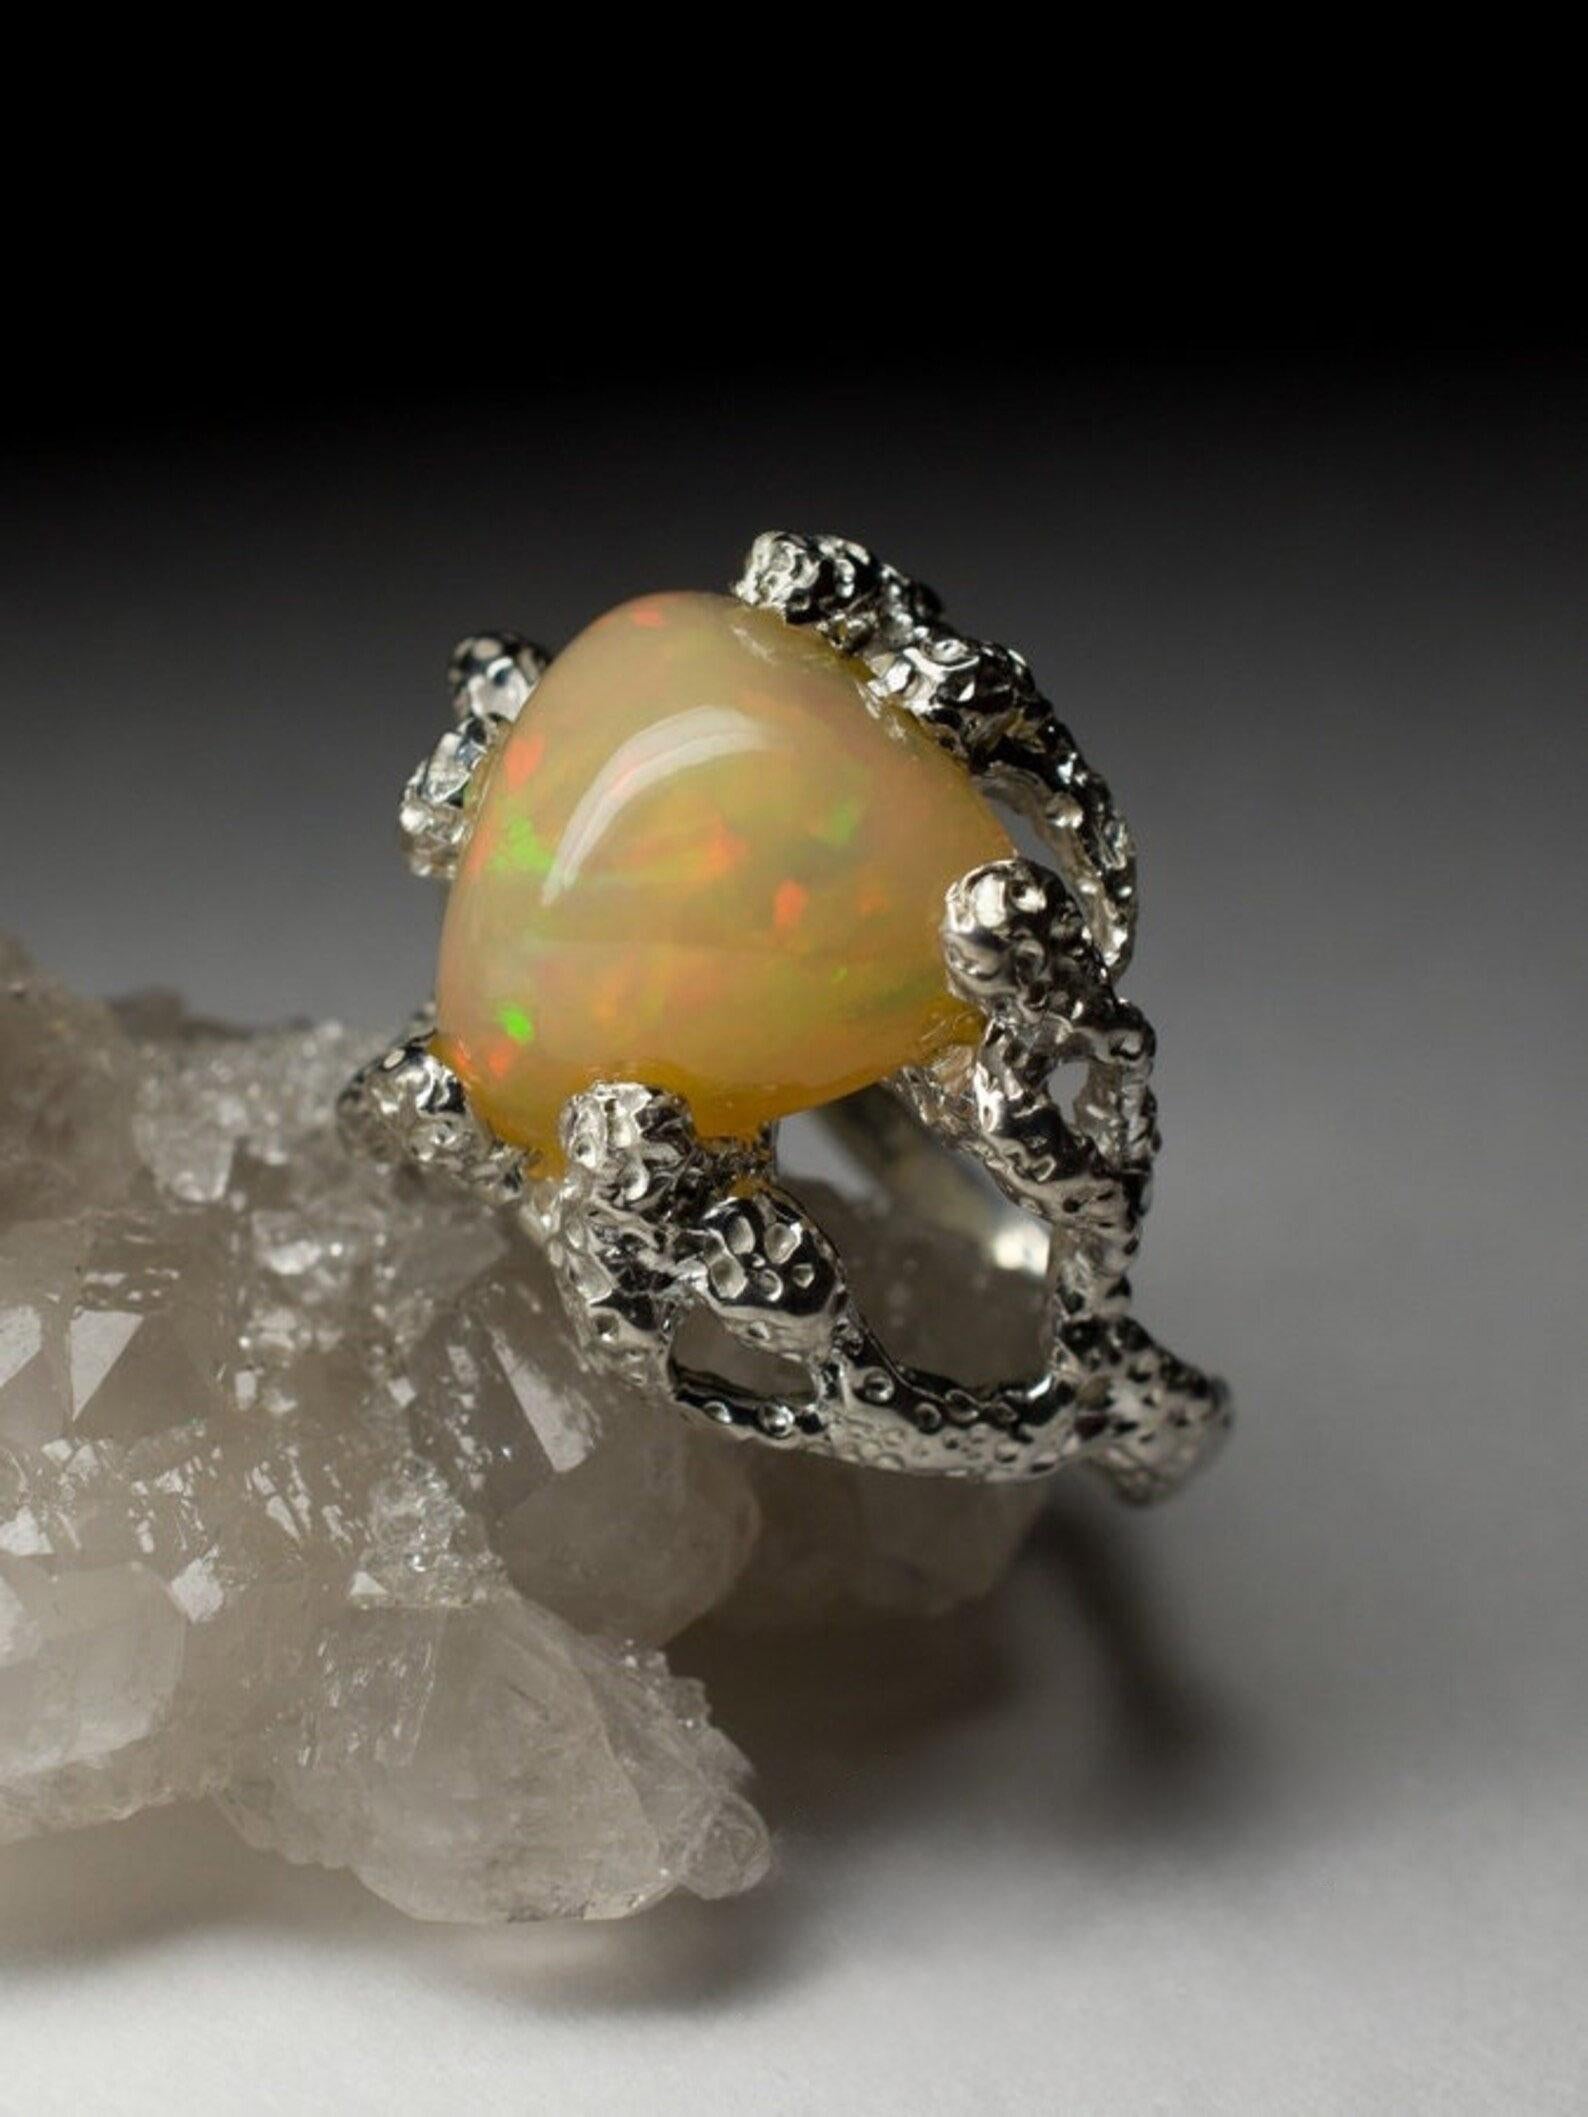 Silver ring with natural Opal 
gemstone origin - Ethiopia
ring weight - 7.34 grams
ring size - 7.5 US
gem size is 0.51 х 0.59 x 0.67 in / 13 х 15 х 17 mm